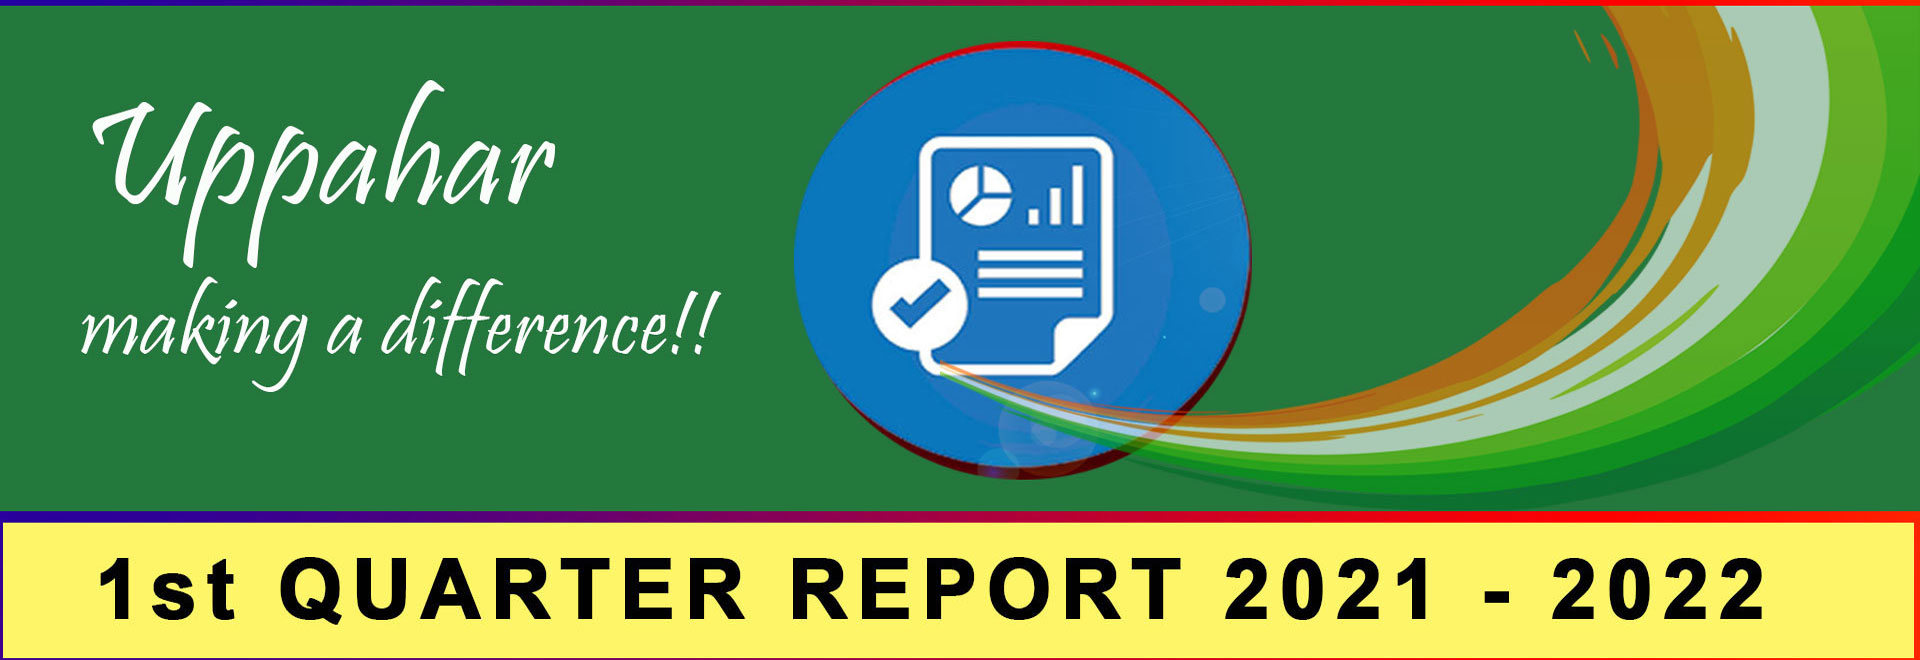 Uppahar India 1st Quarterly Report 2021-2022